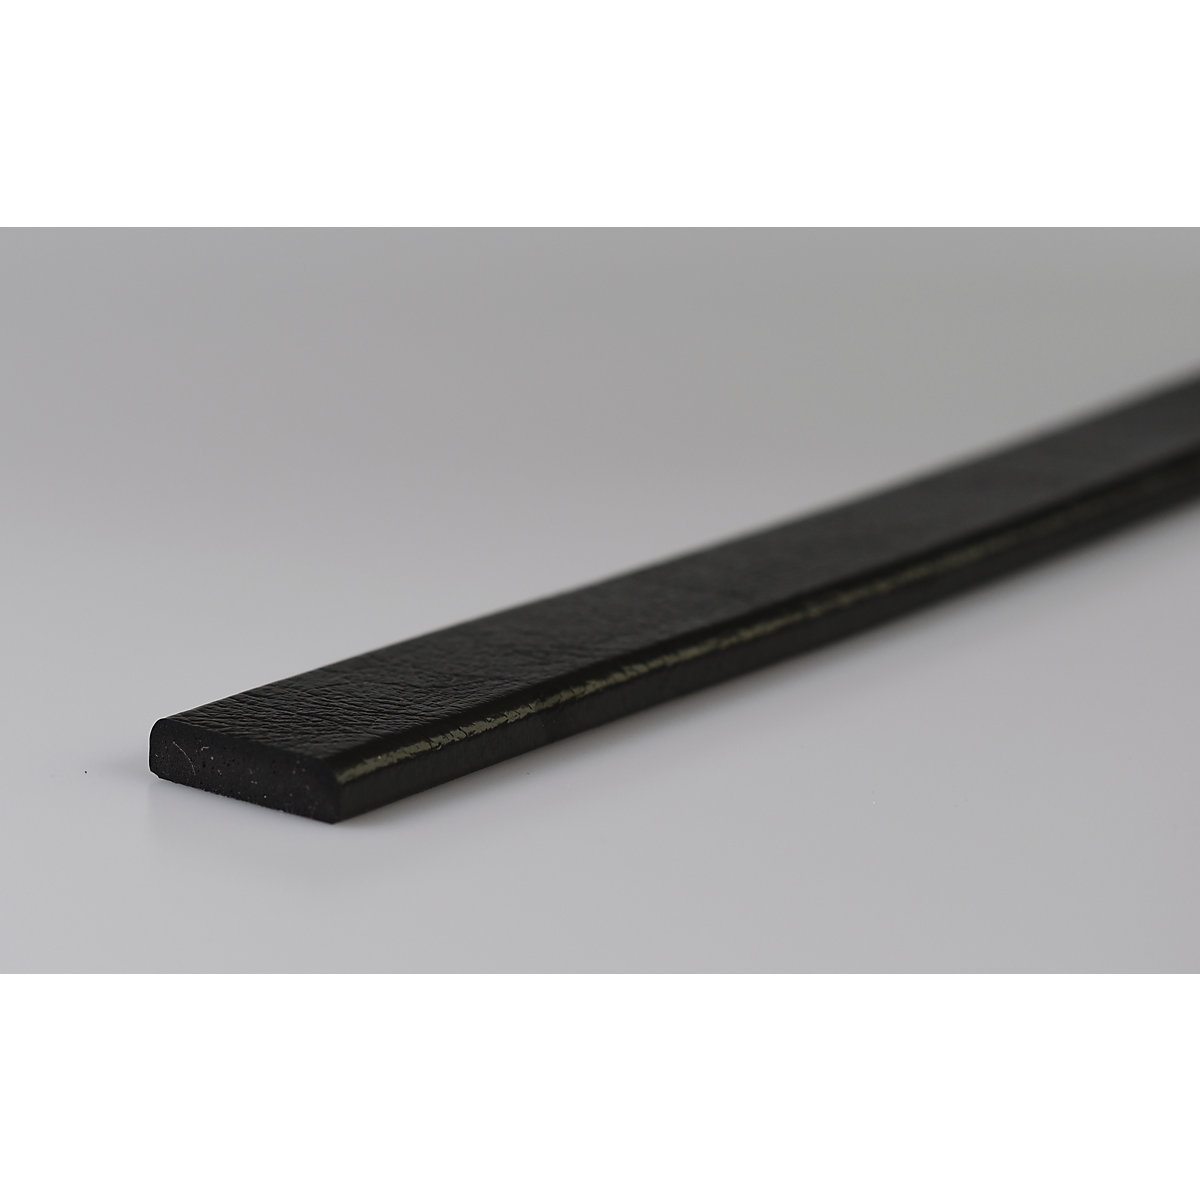 Knuffi®-oppervlaktebescherming – SHG, type F, stuk van 1 m, zwart-32